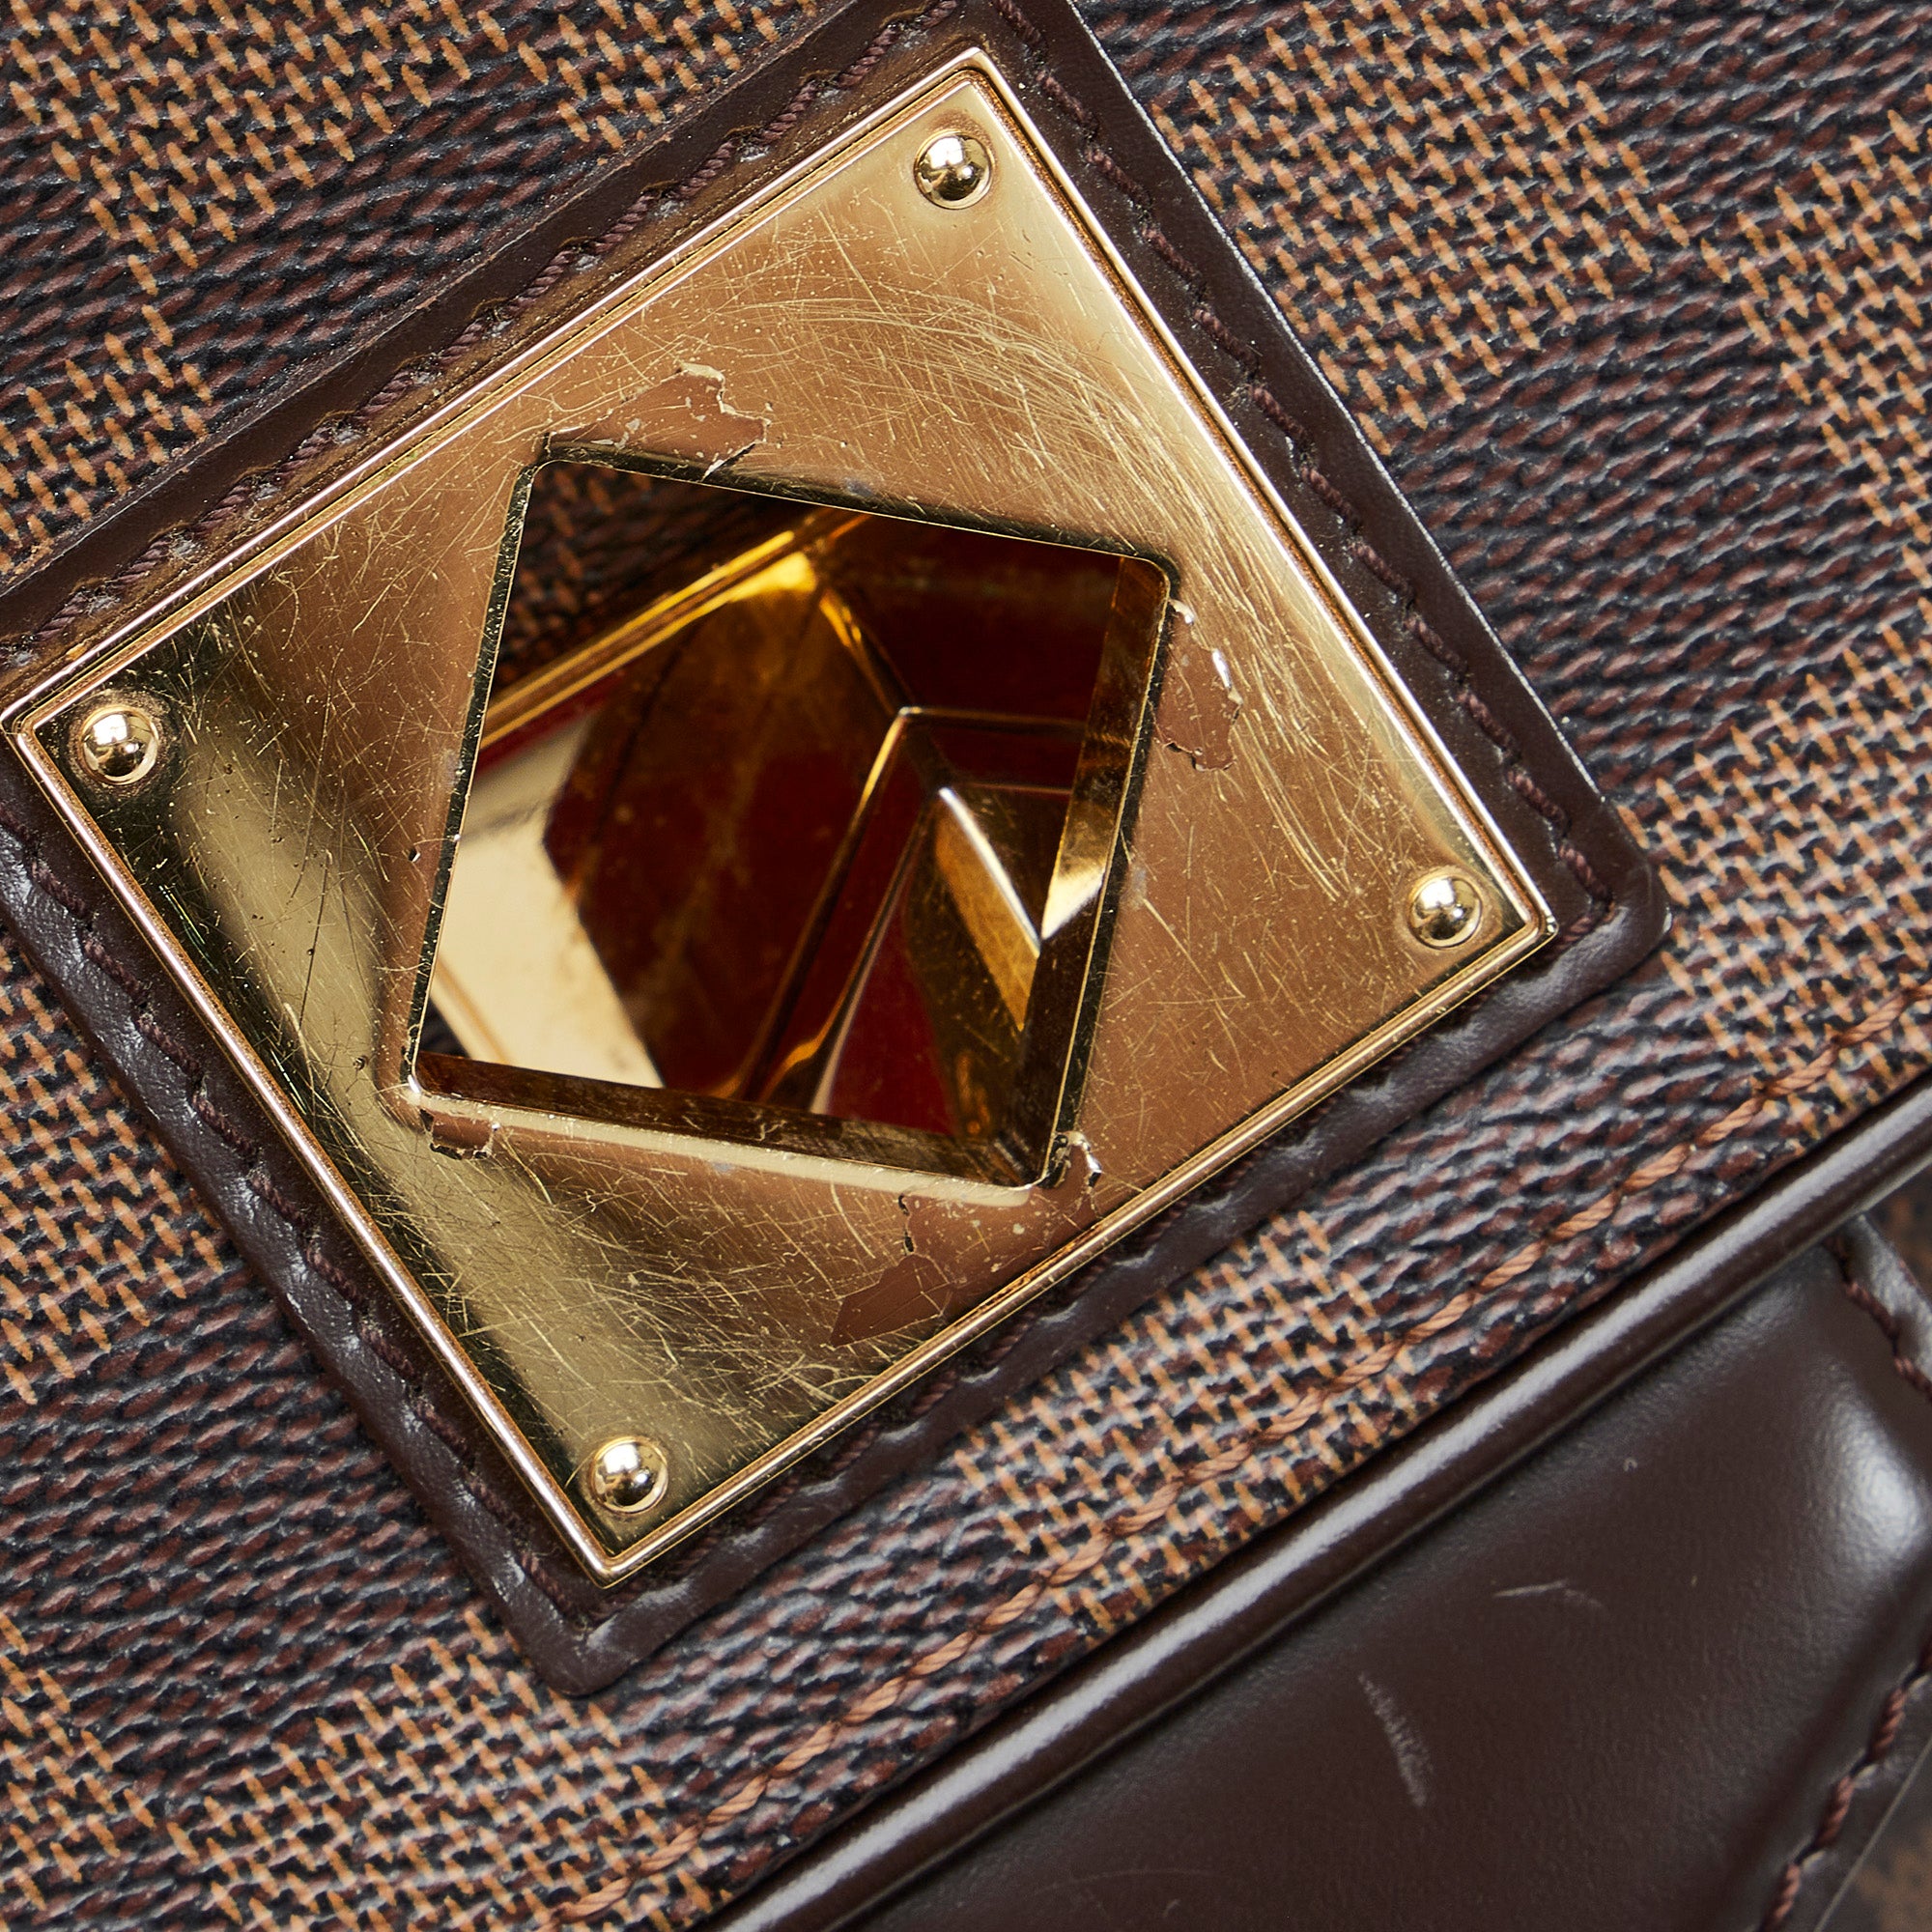 Bergamo PM, Used & Preloved Louis Vuitton Shoulder Bag